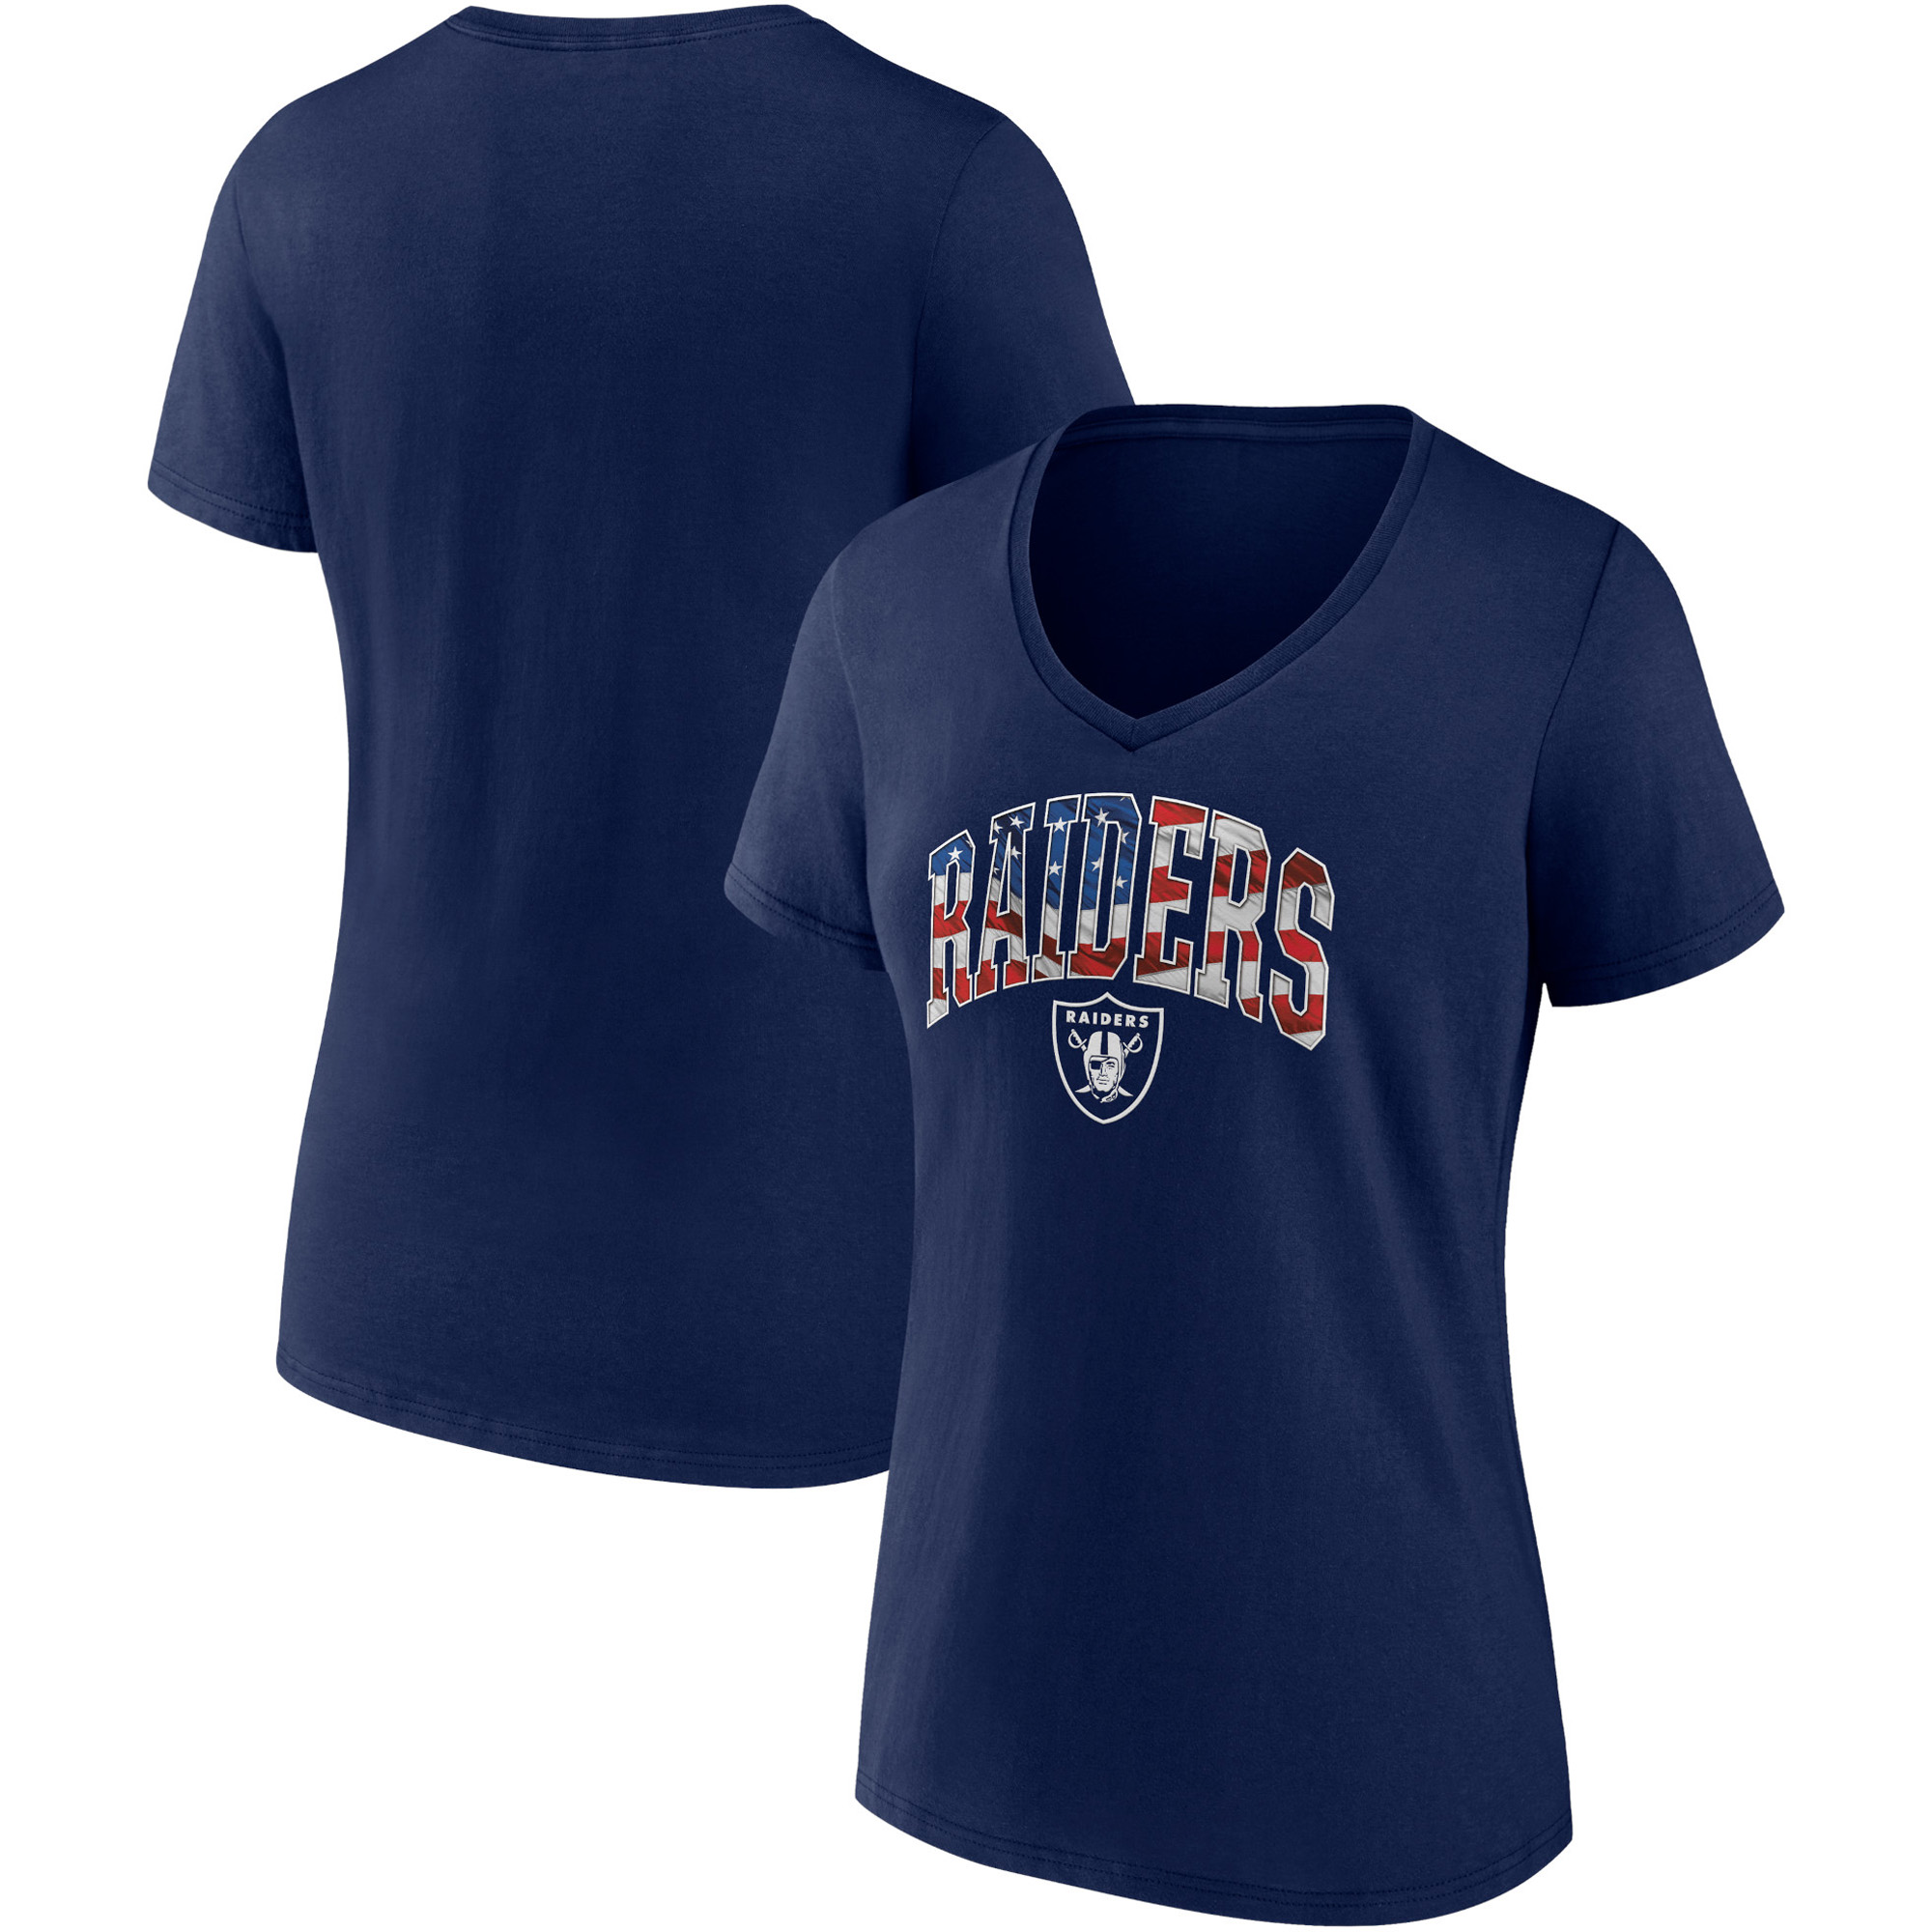 Damen Fanatics – Team Banner Wave – Las Vegas Raiders – Marineblaues T-Shirt mit V-Ausschnitt